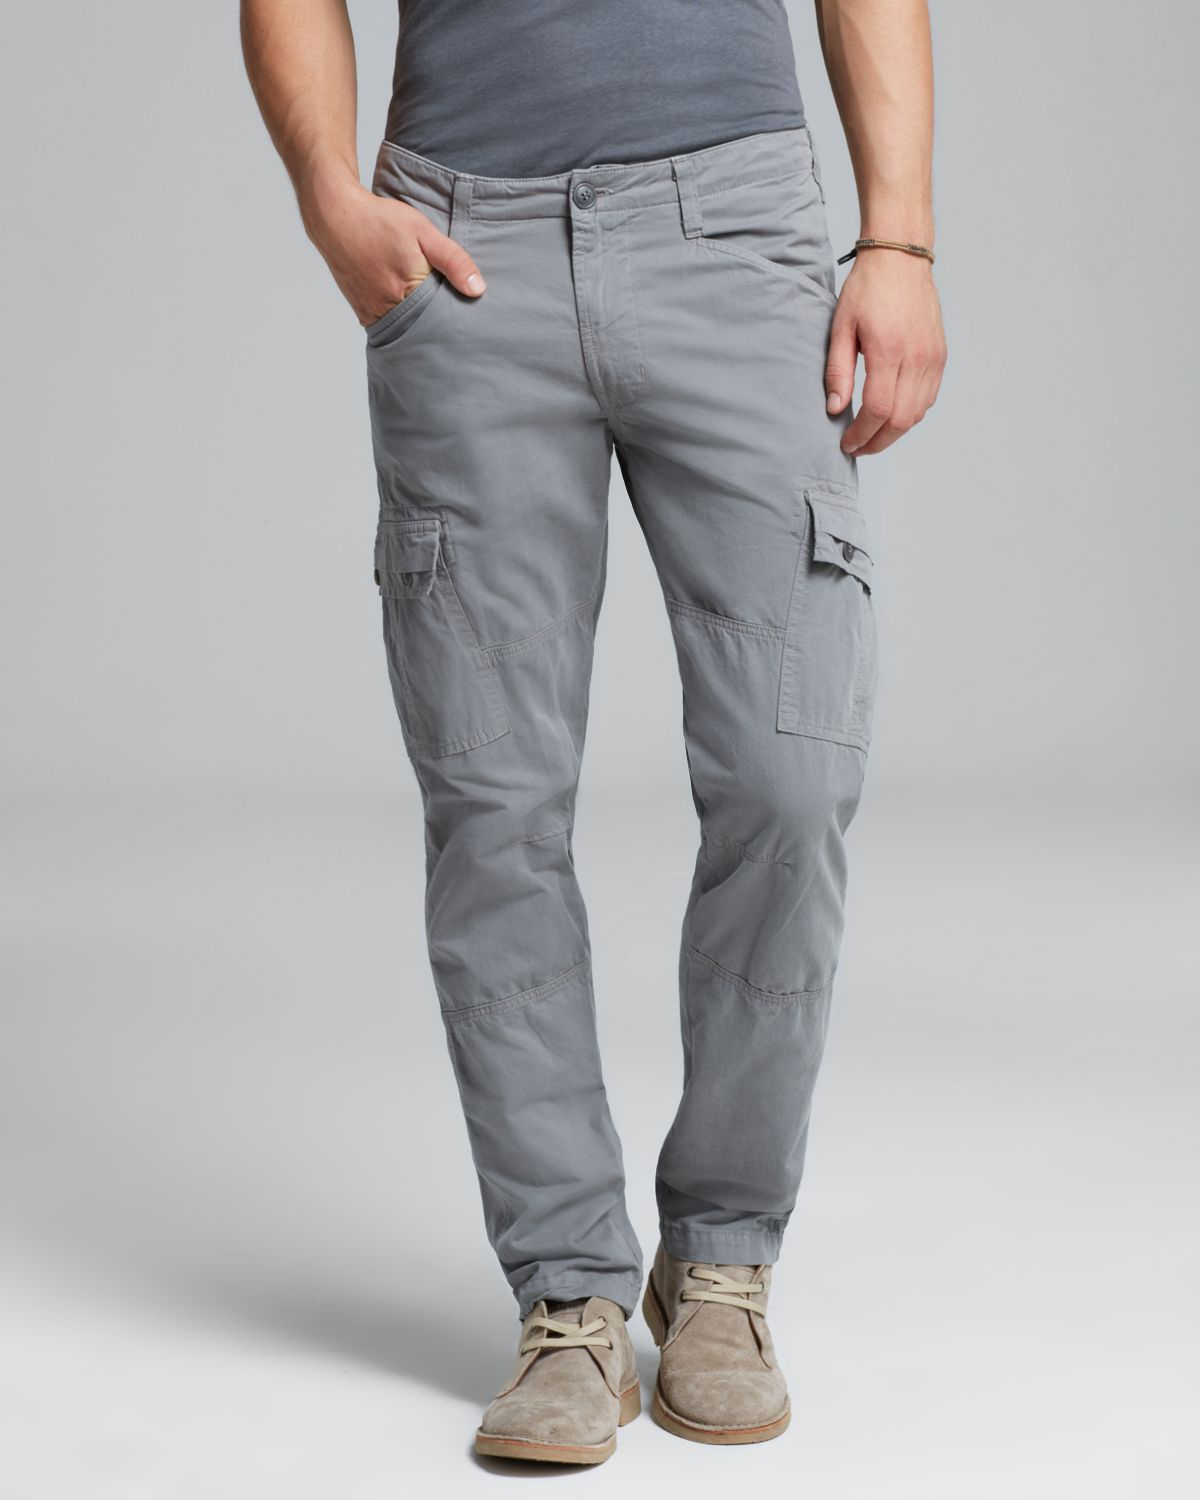 J Brand Trooper Slim Cargo Pants in Moss Grey (Gray) for Men - Lyst